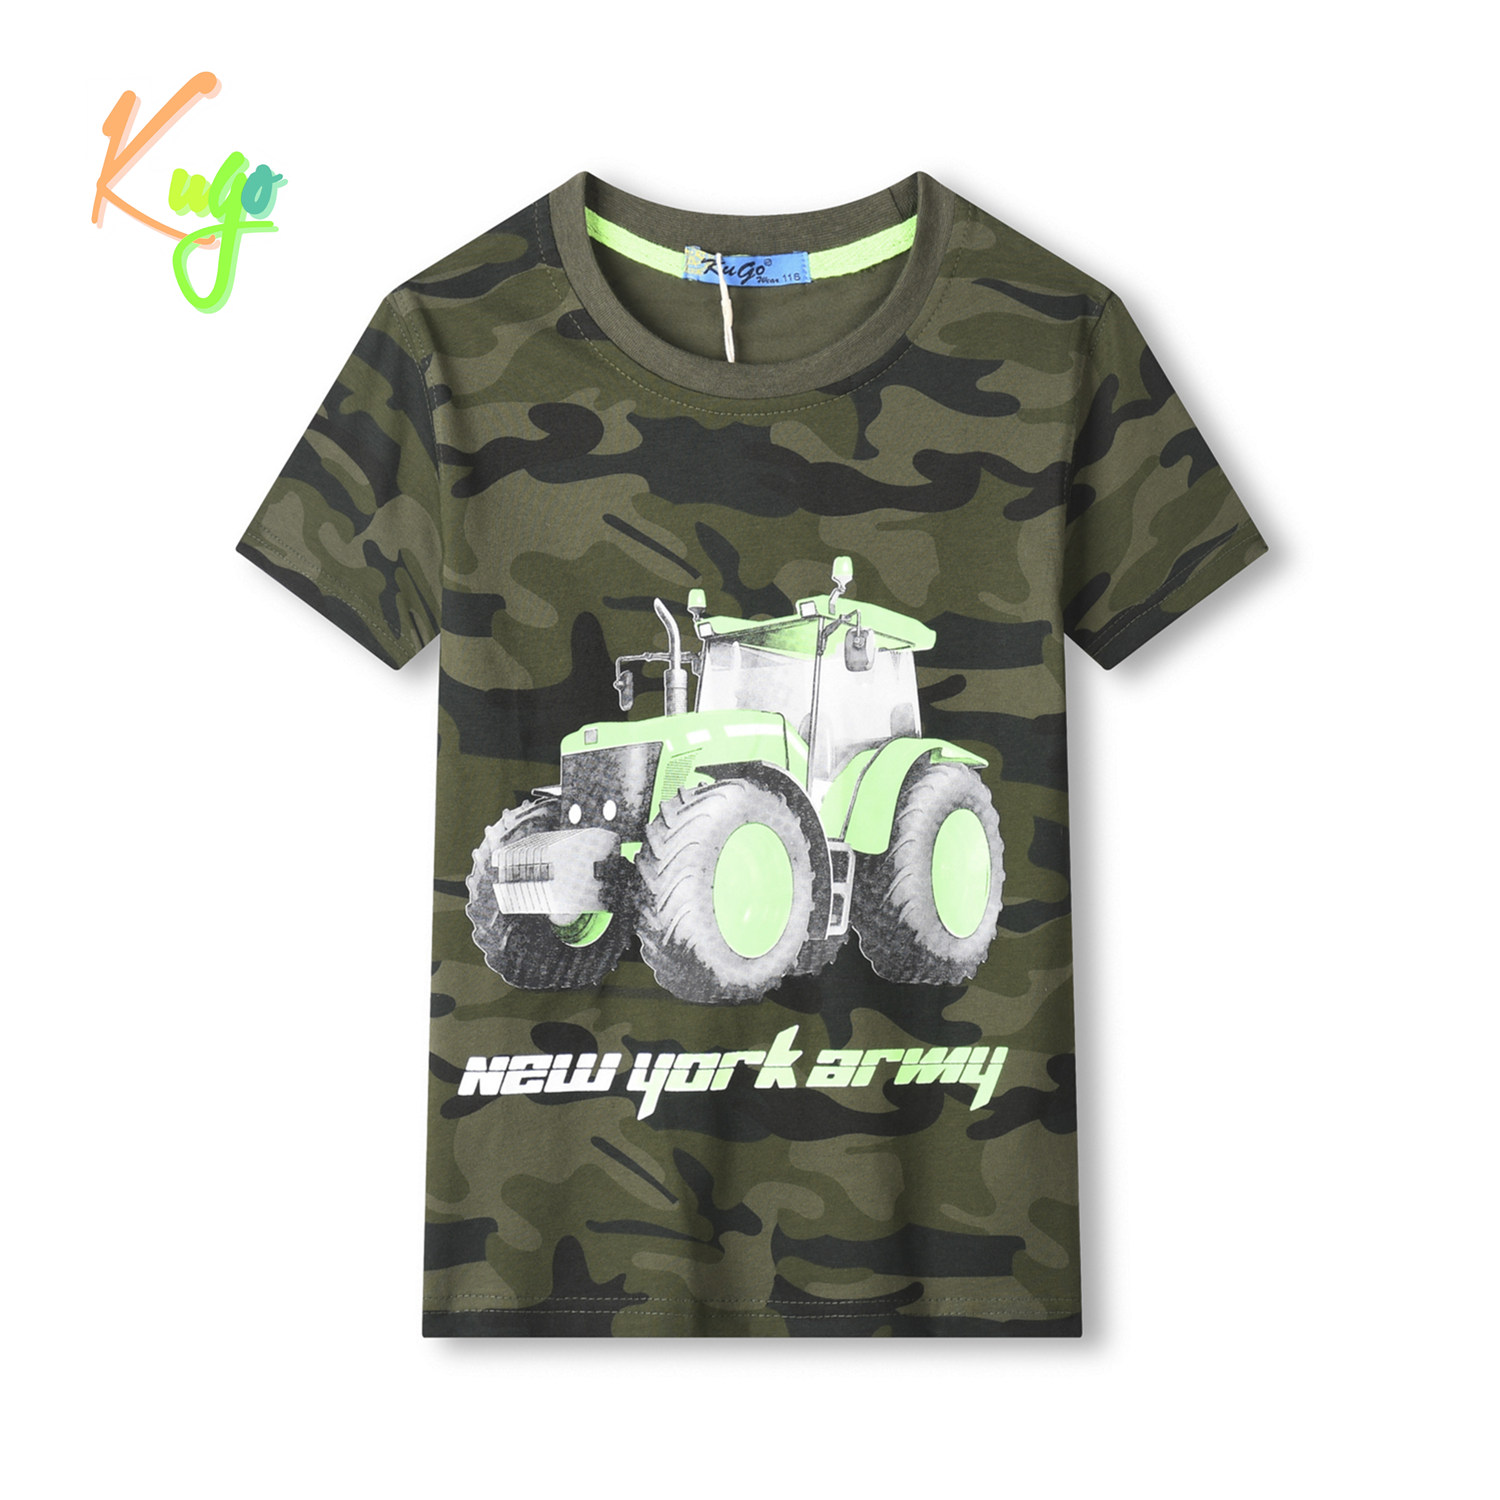 Chlapecké triko - KUGO TM9216, khaki/ zelený bagr Barva: Khaki, Velikost: 98